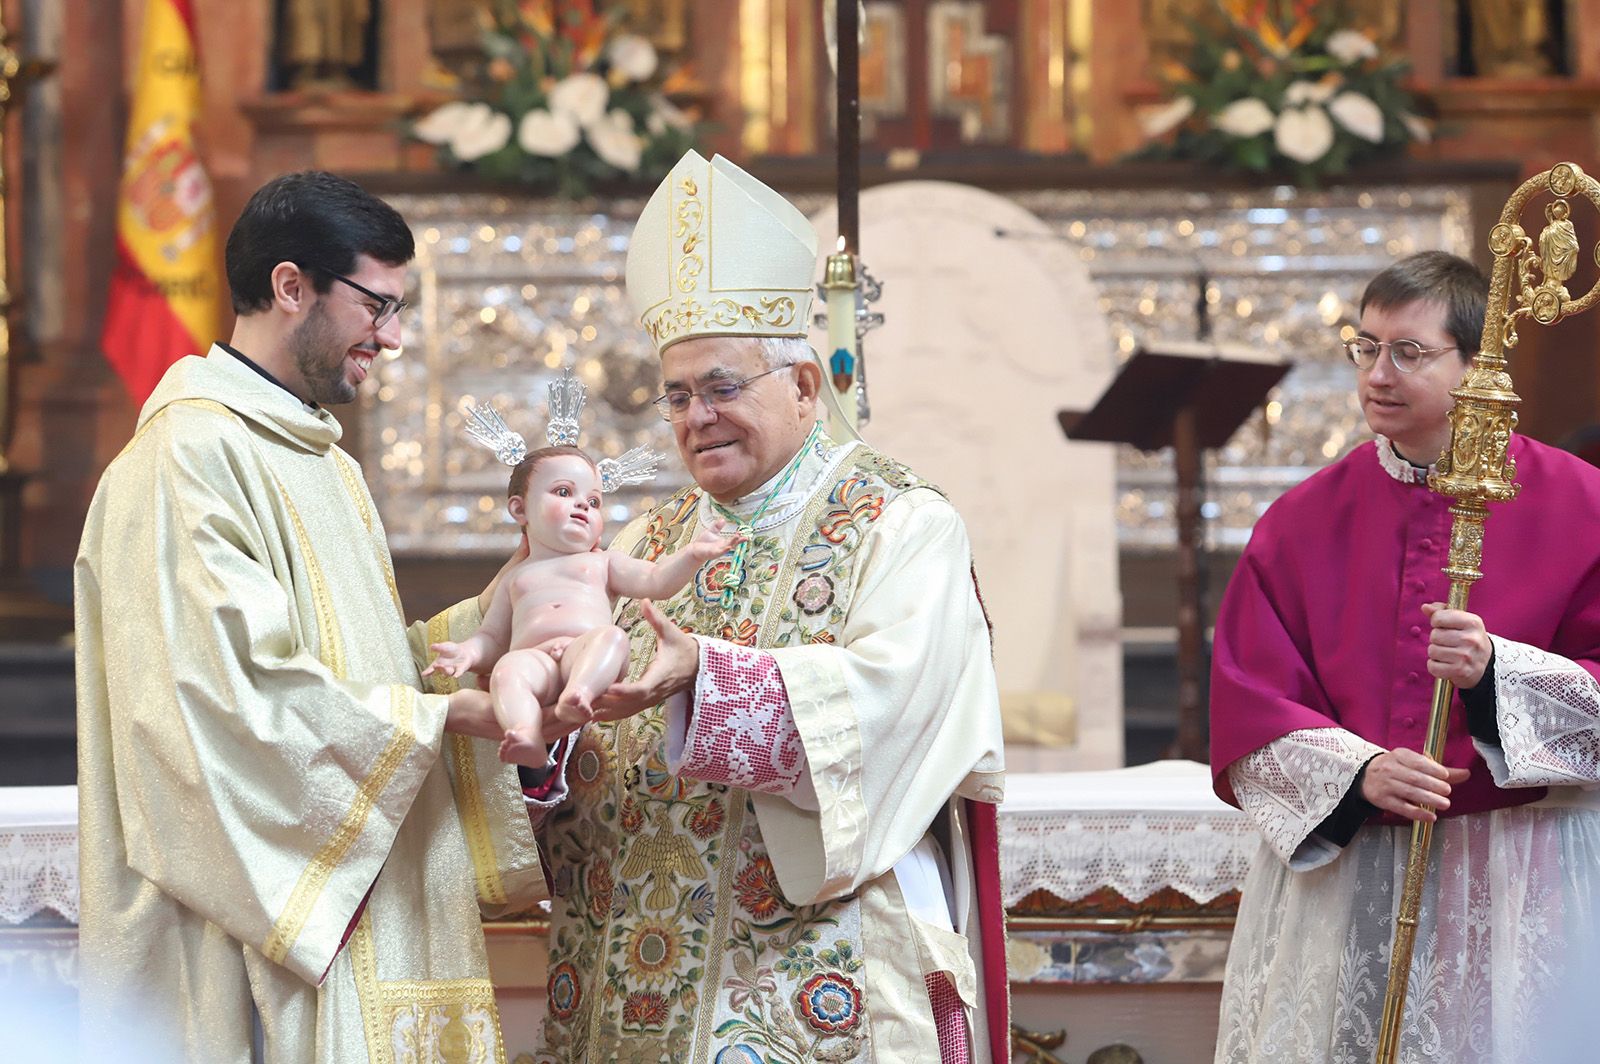 El obispo de Córdoba pide por la paz en la misa de la Navidad